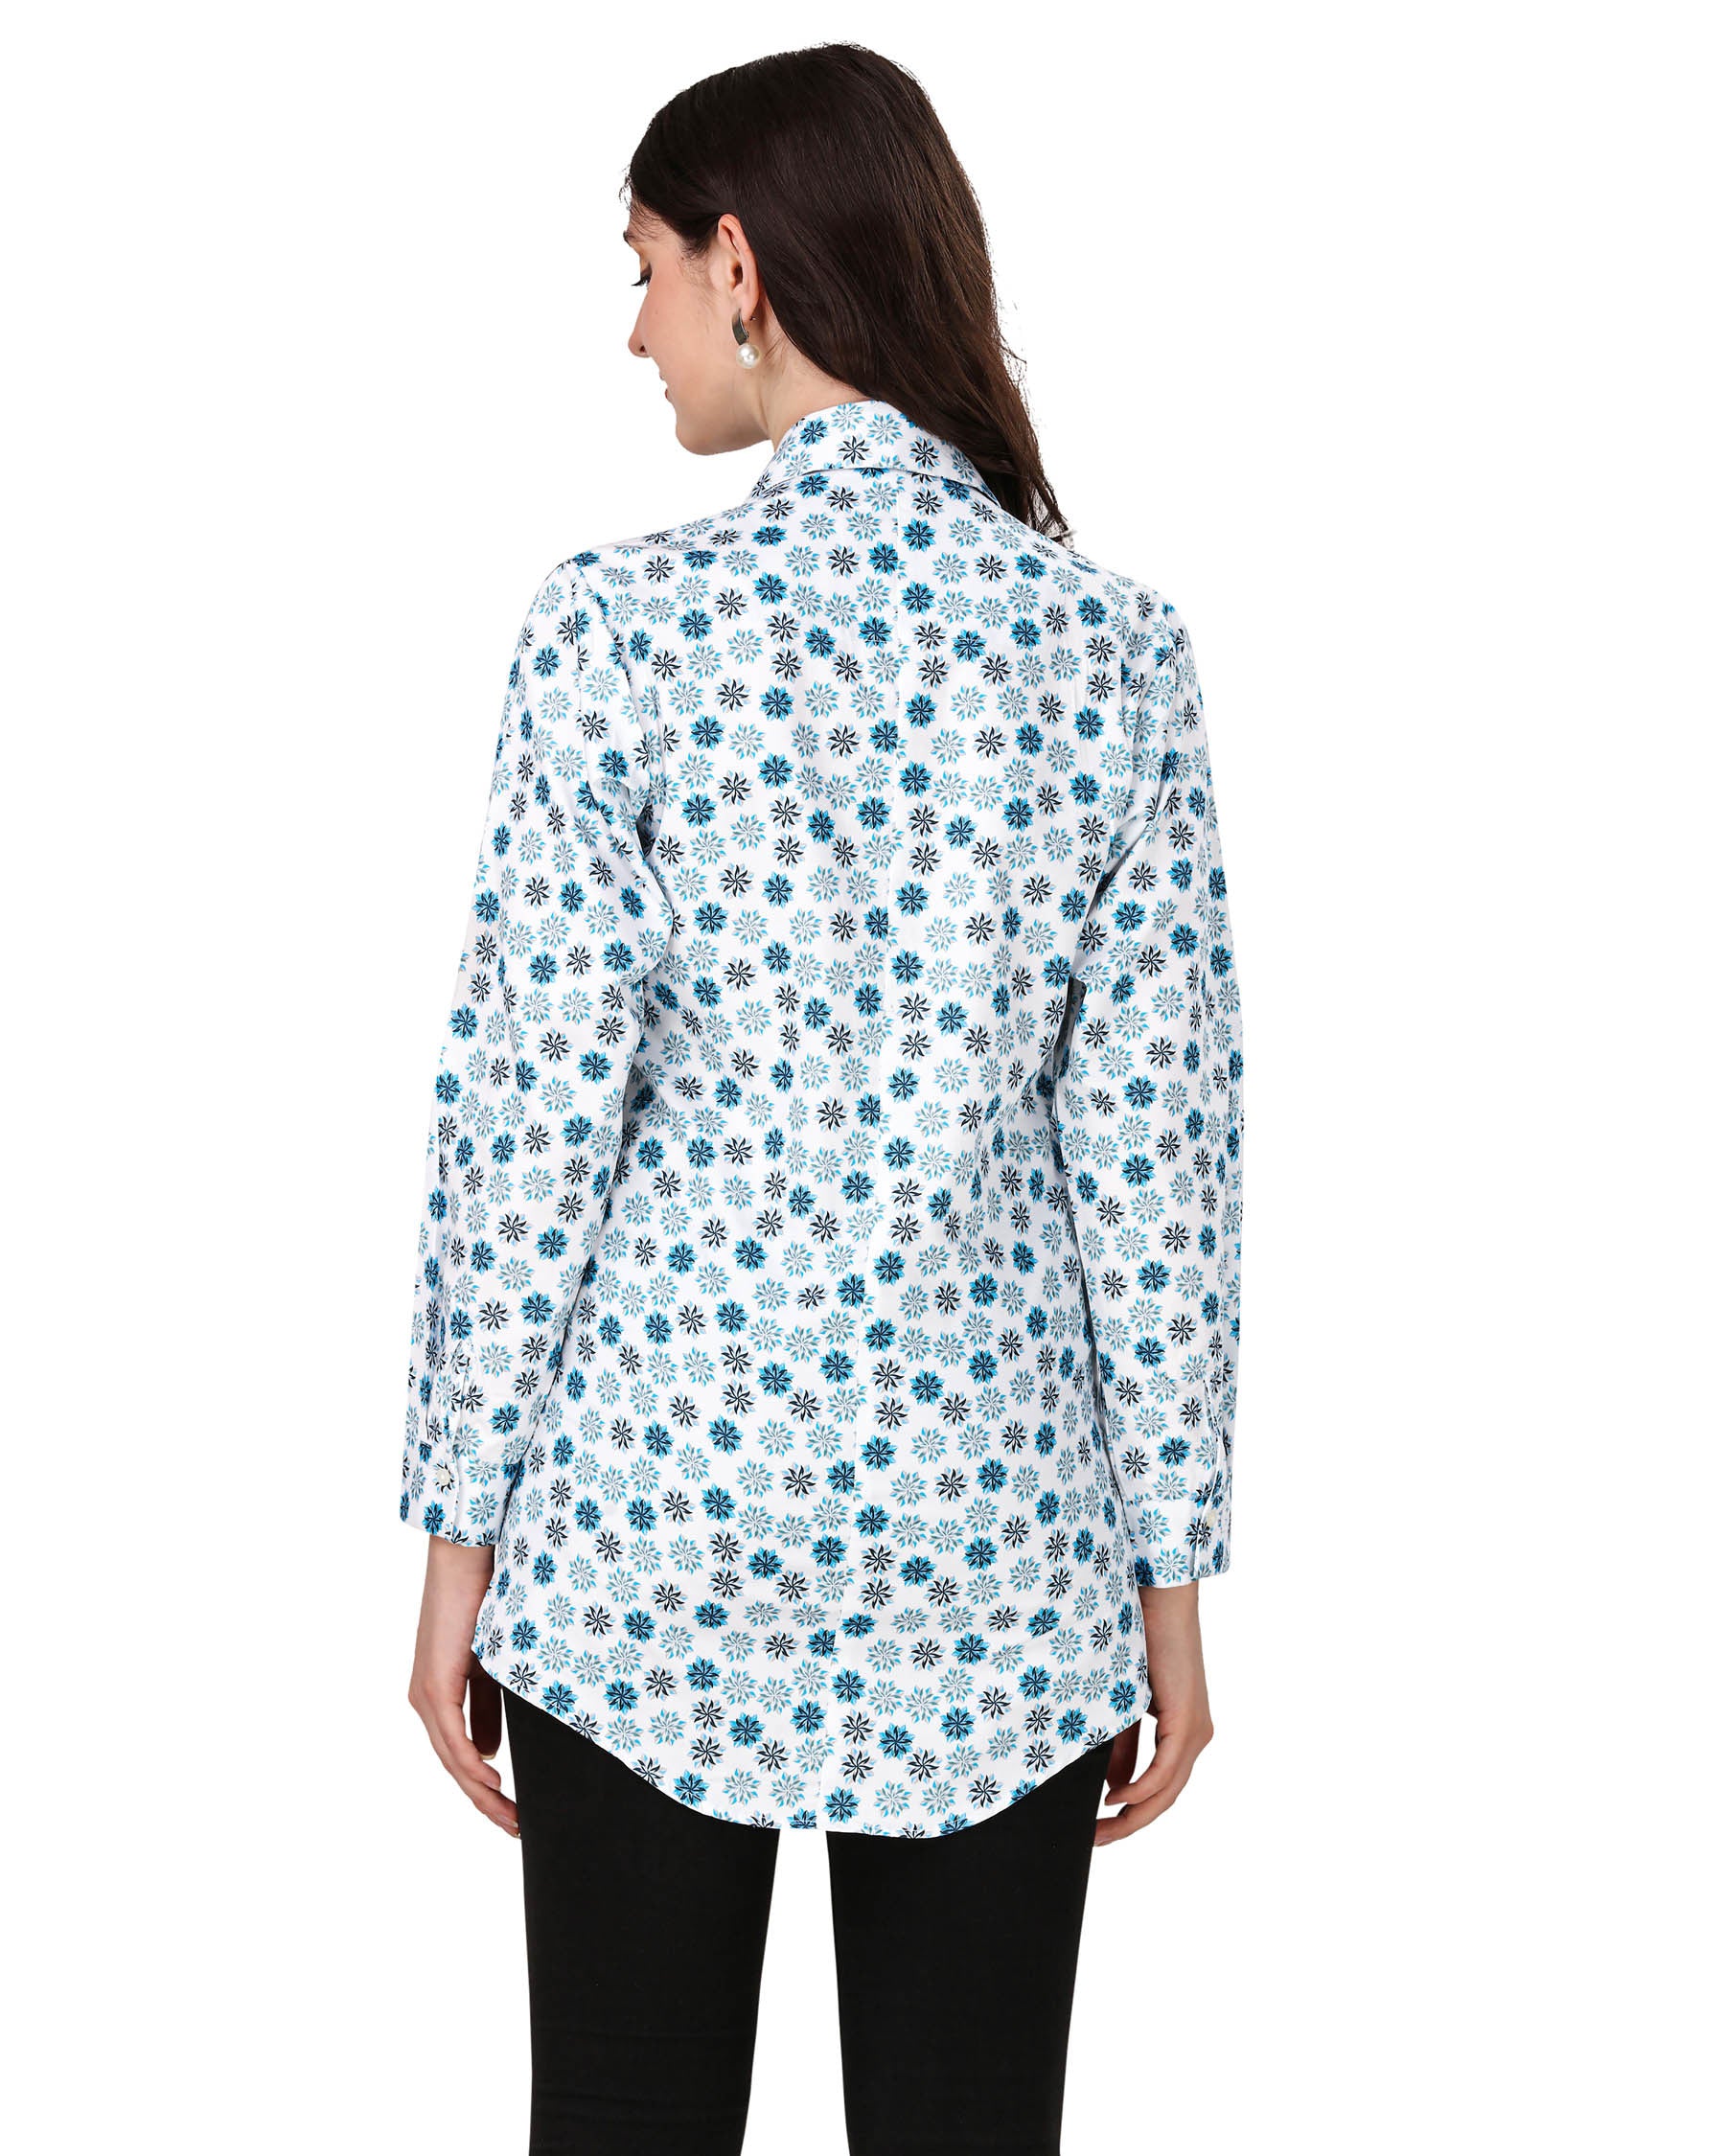 Bright White with Curious Blue Printed Super Soft Premium Cotton Women’s Shirt